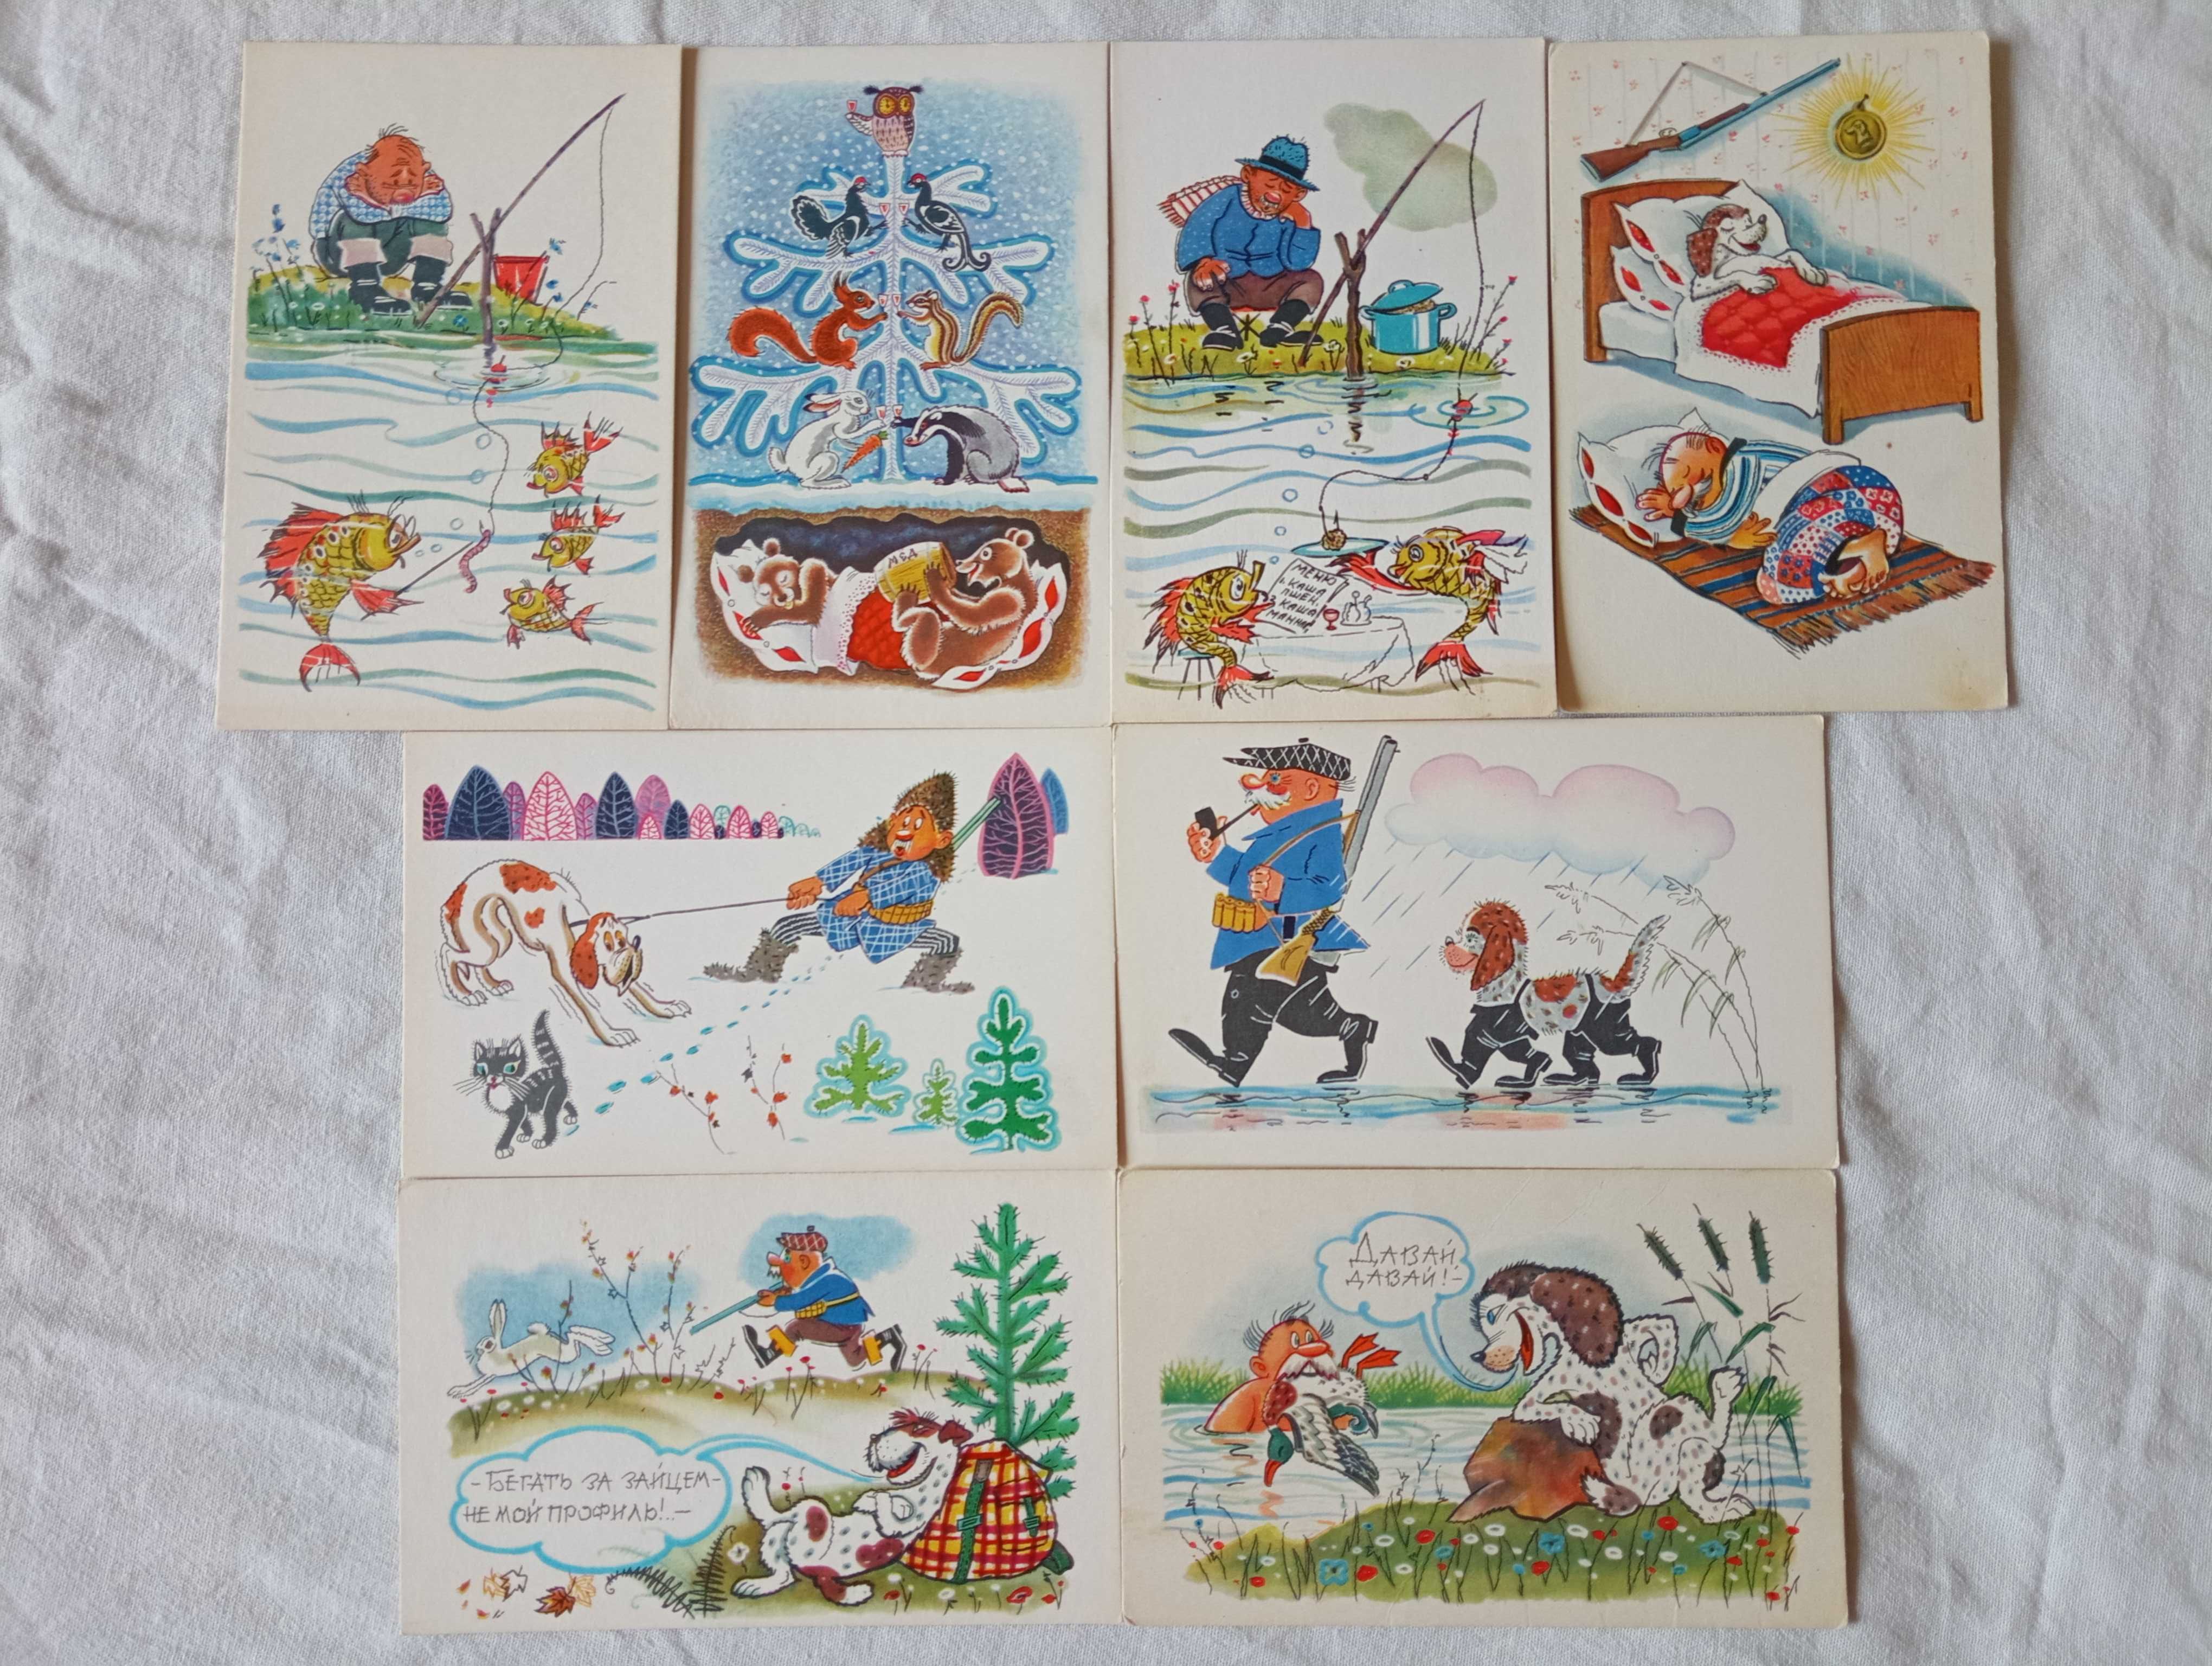 Чистые открытки "Охота и рыбалка" Шварца и Орлова, 1968г., ОБМЕН